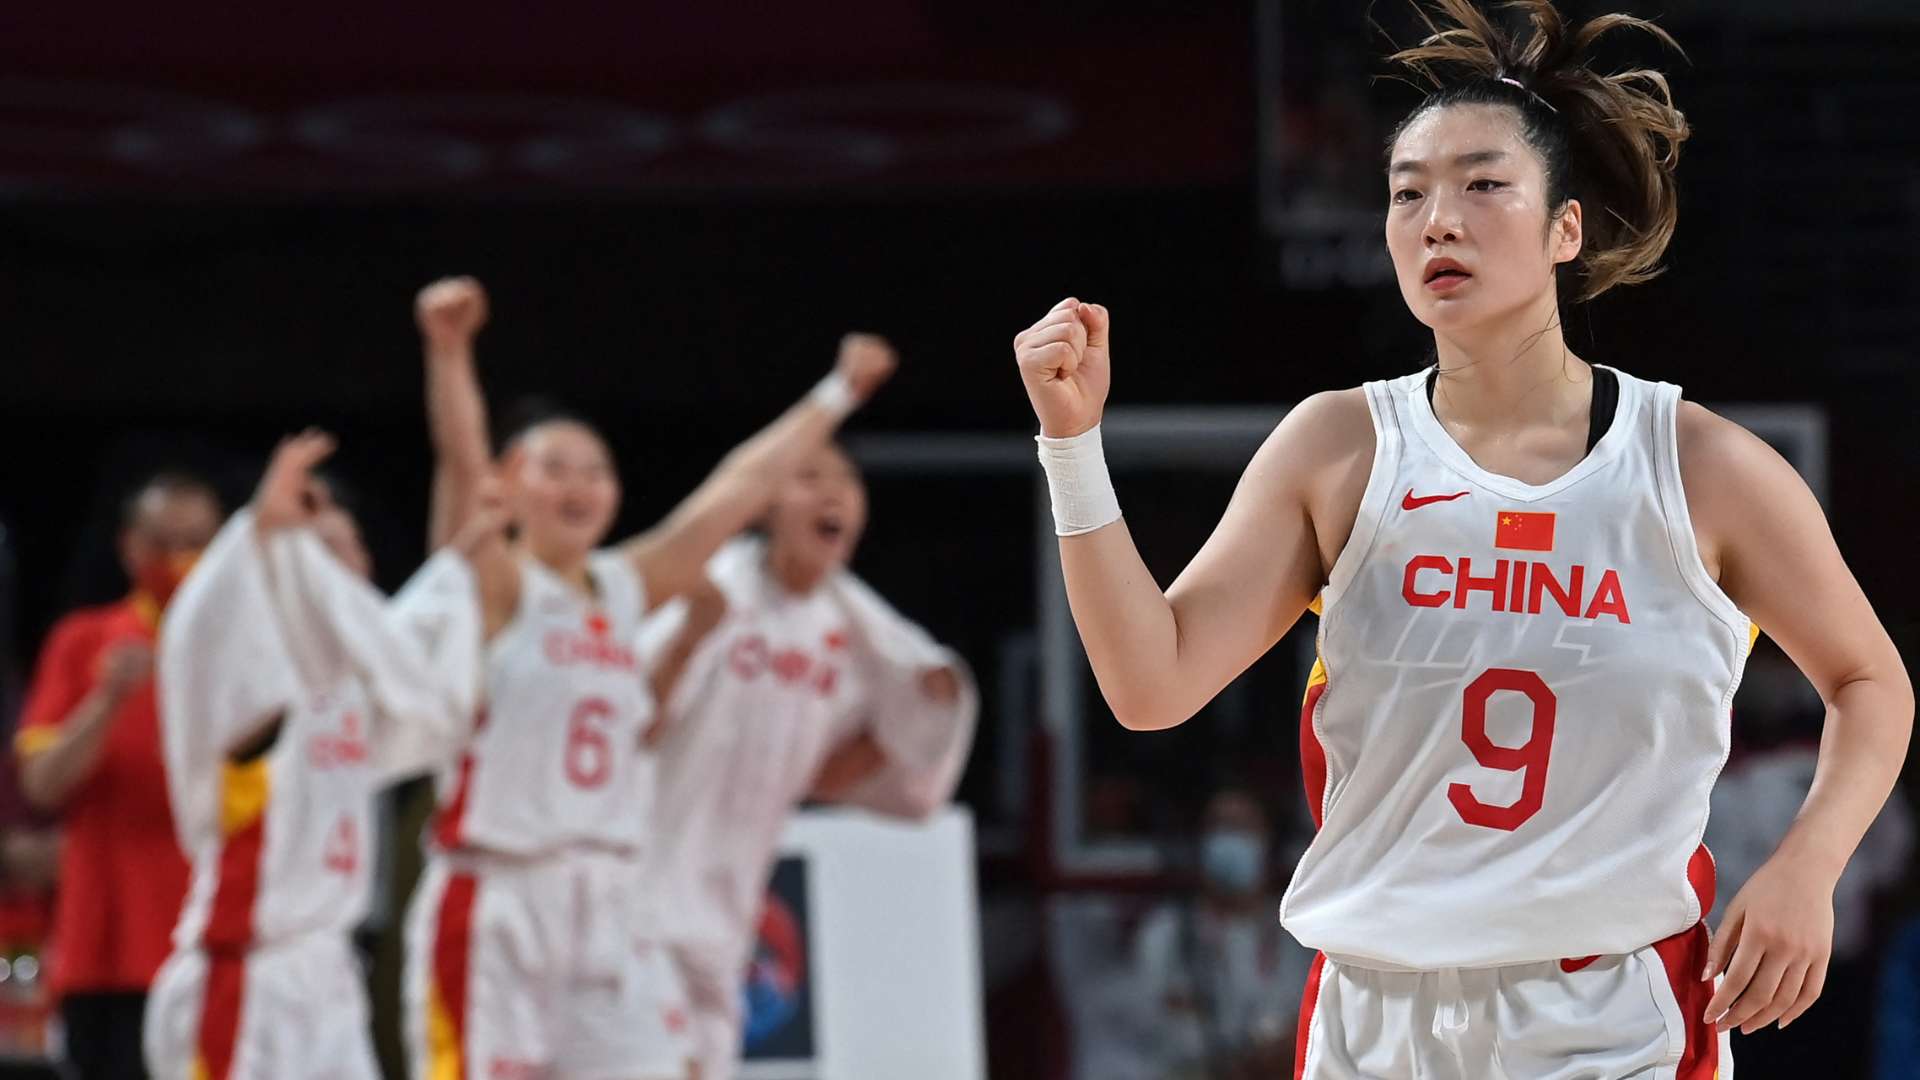 Tokyo 2020 Basketball China women's team 